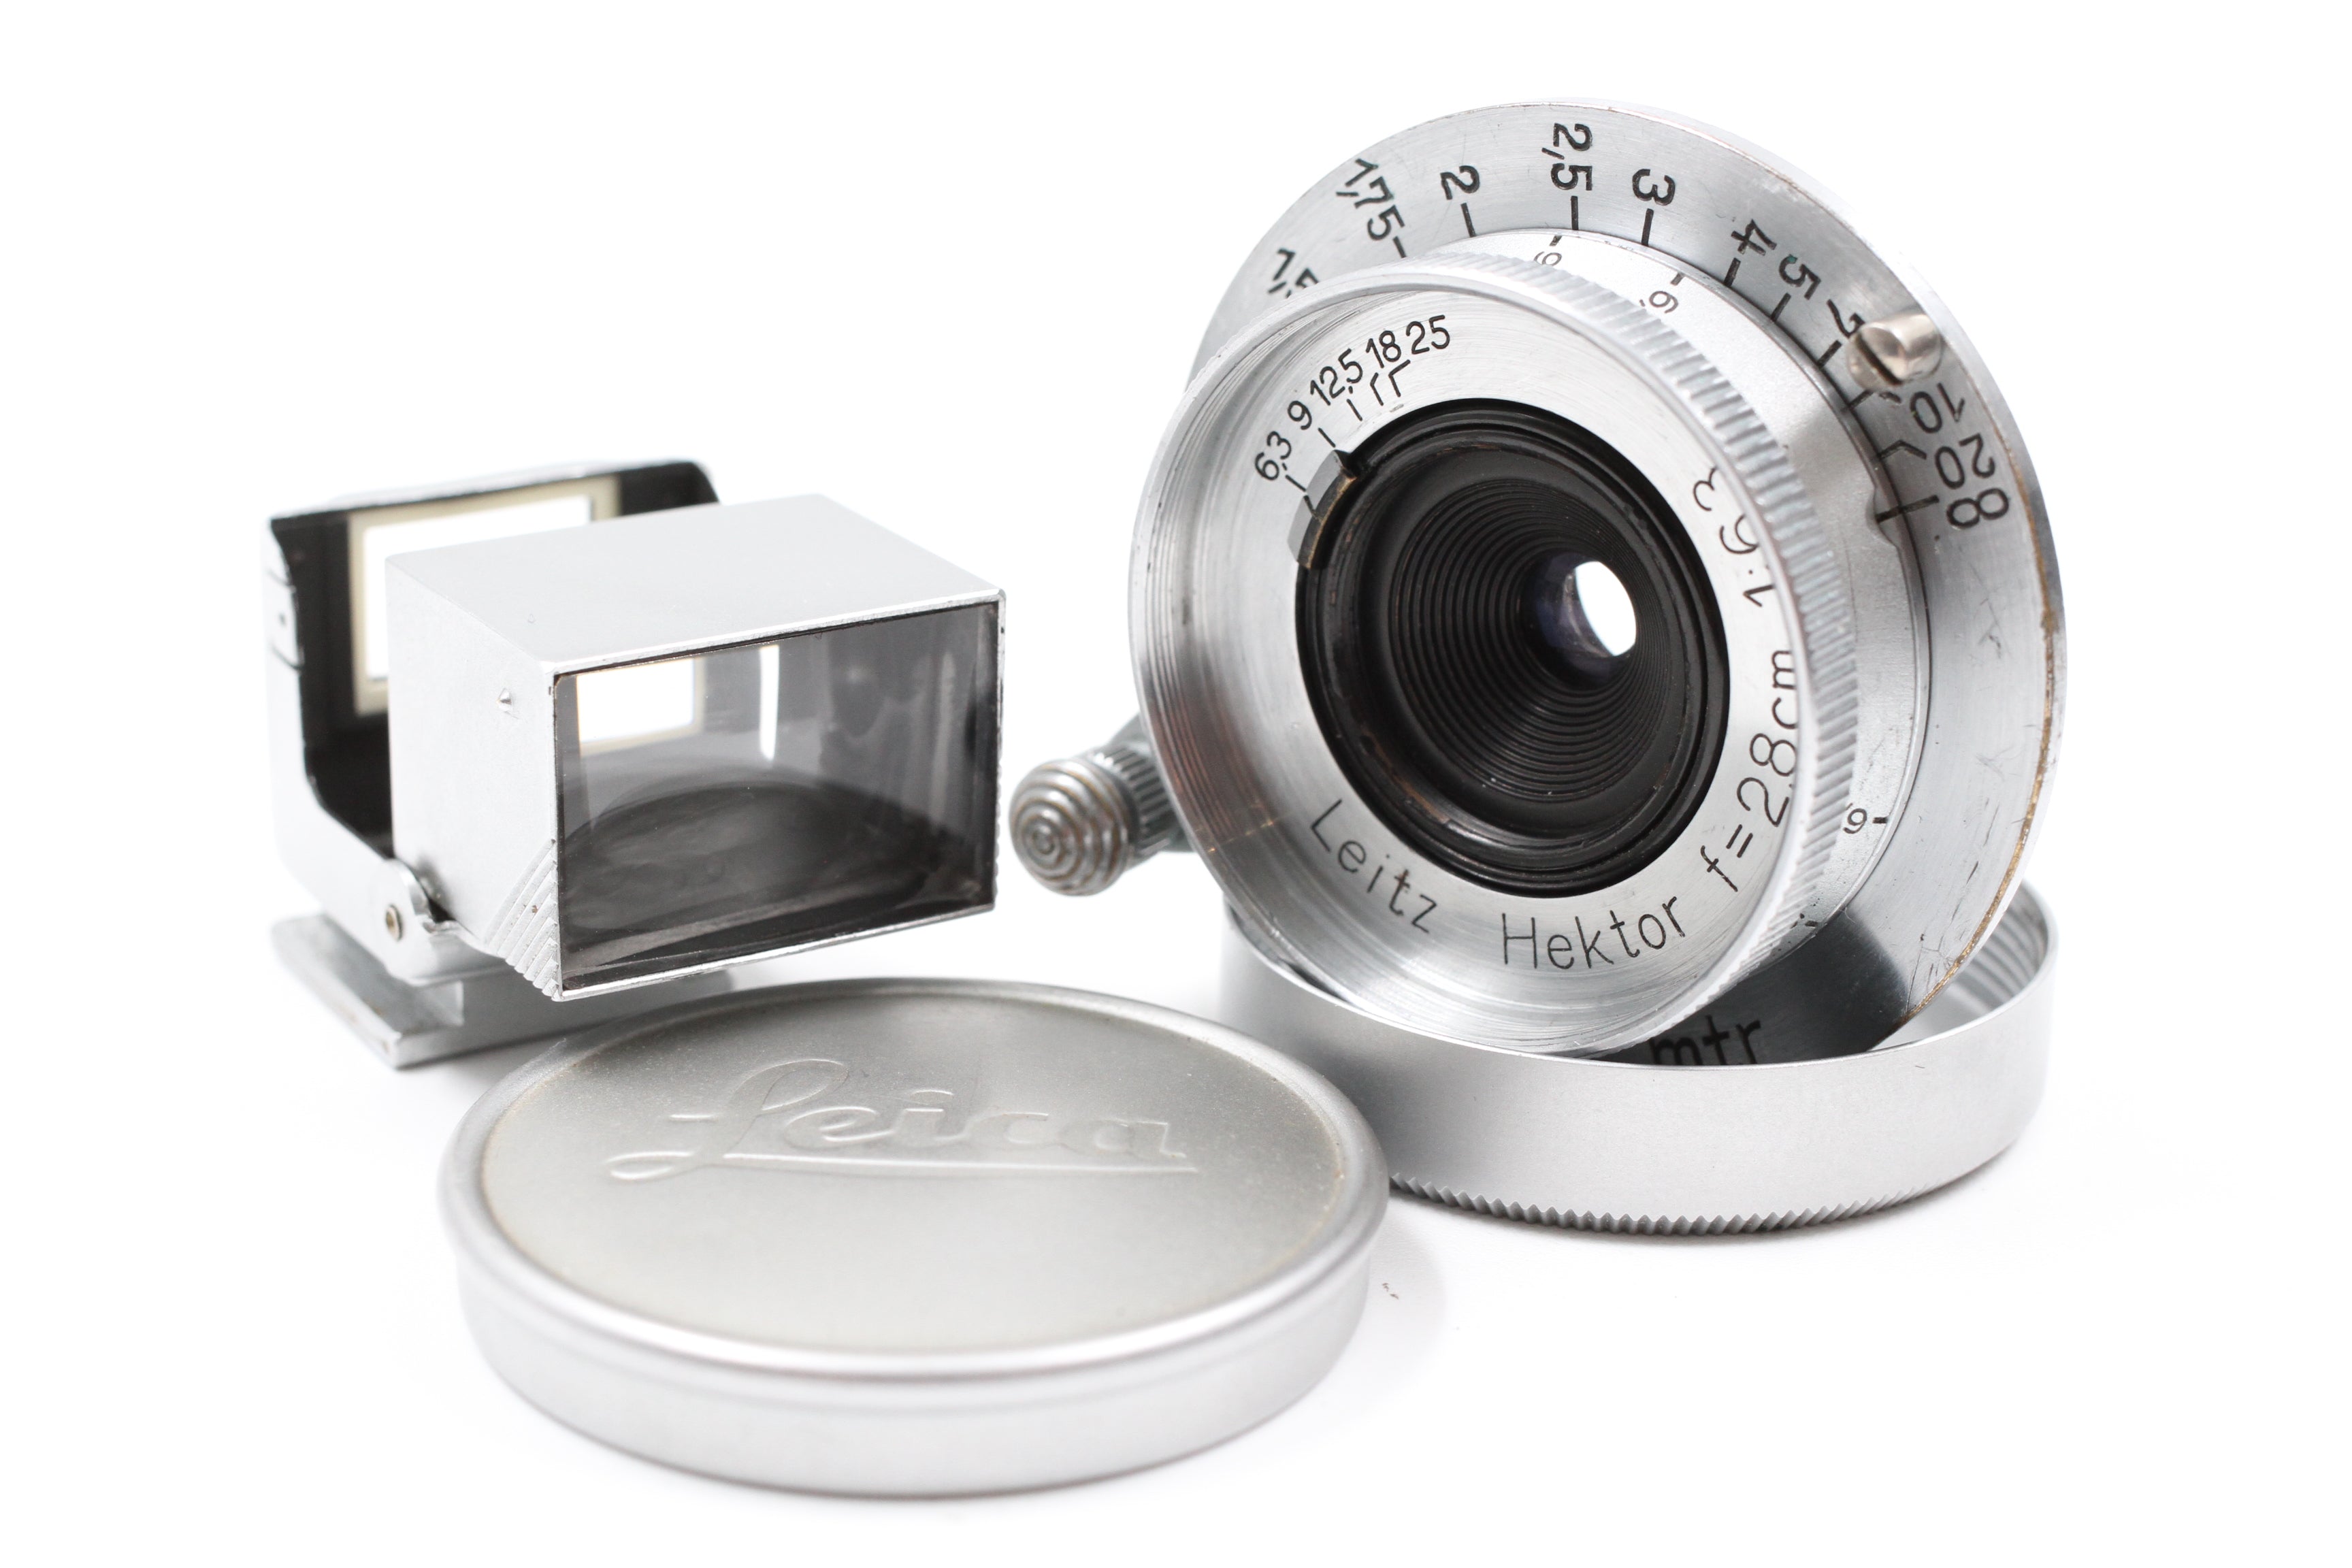 Leica, Leitz L39 2.8cm f6.3 Hektor w/ 2.8cm SUOOQ Viewfinder